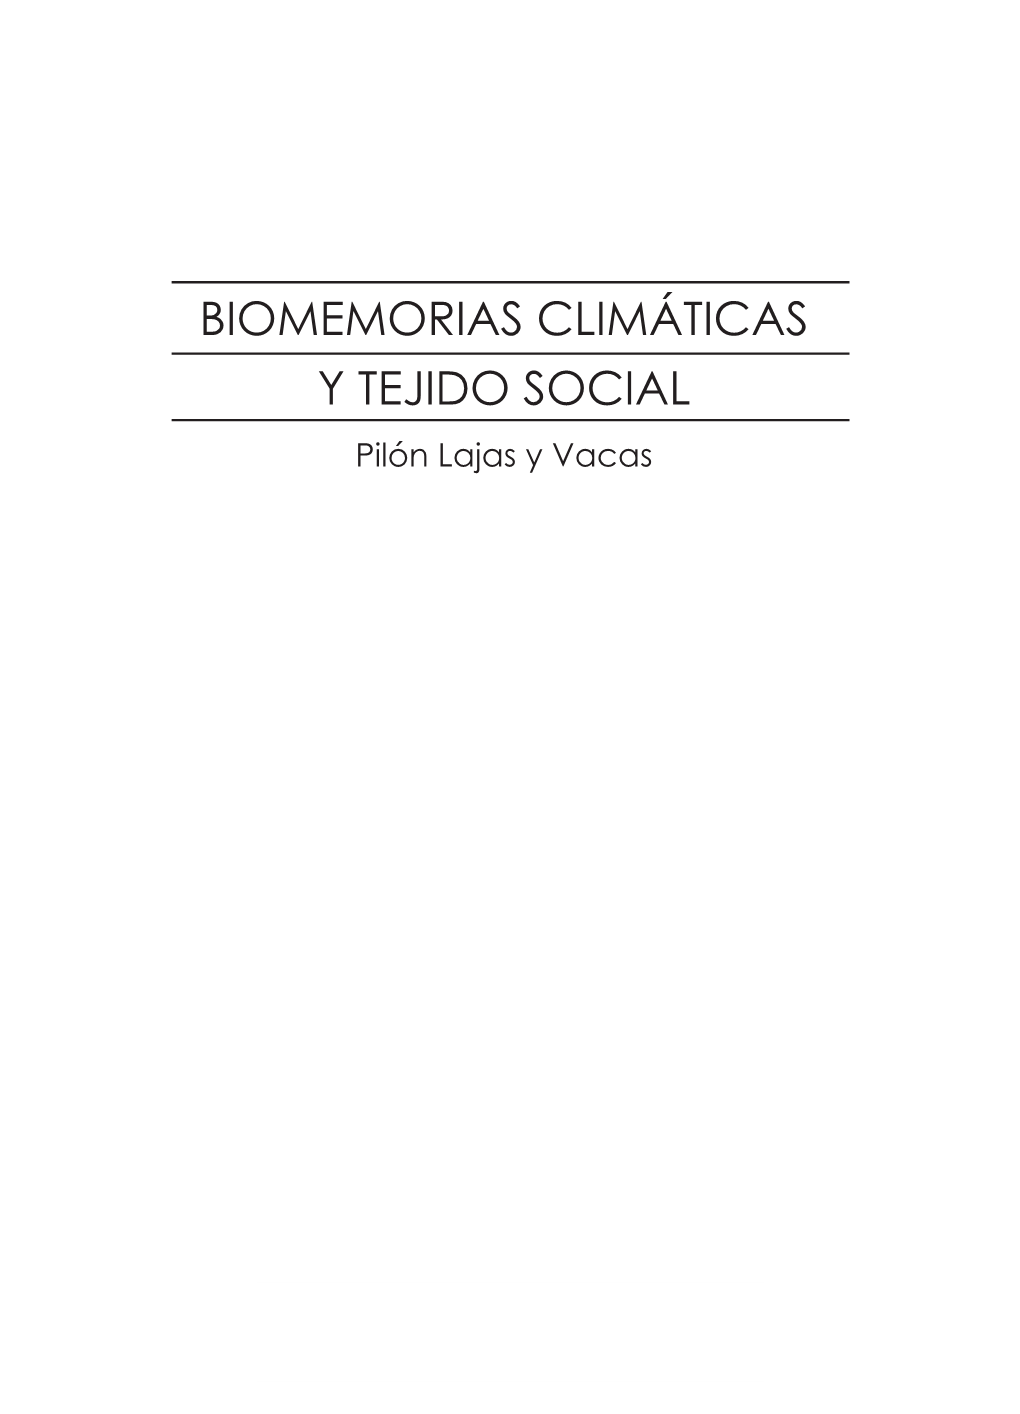 OFICIAL Biomemorias Climaticas Oficial.Indd